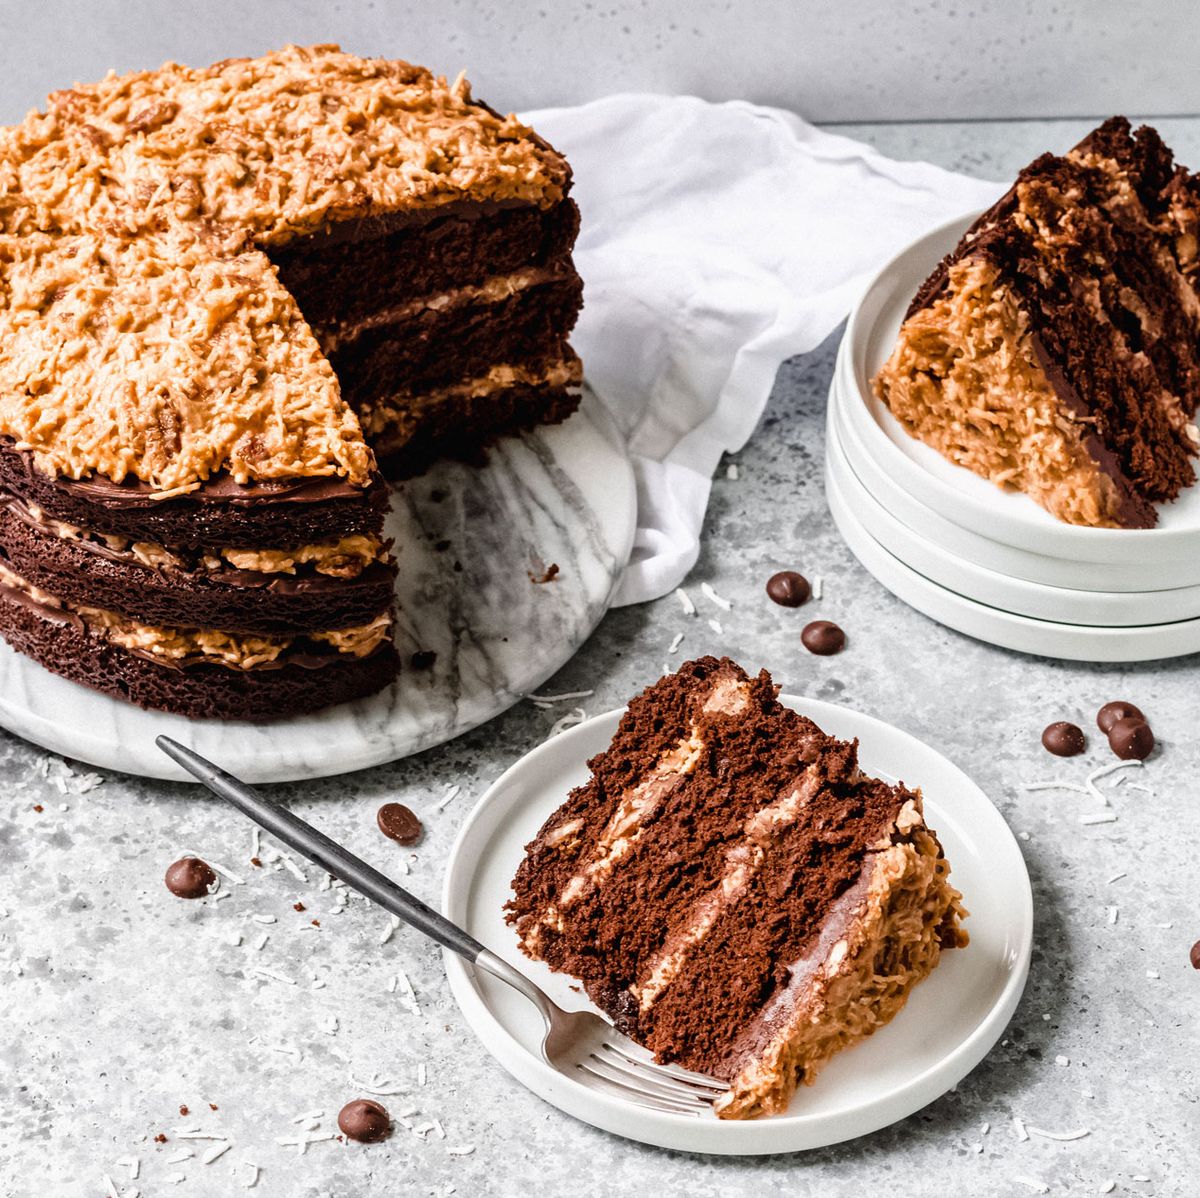 Best German Chocolate Cake Recipe - How to Make German Chocolate Cake